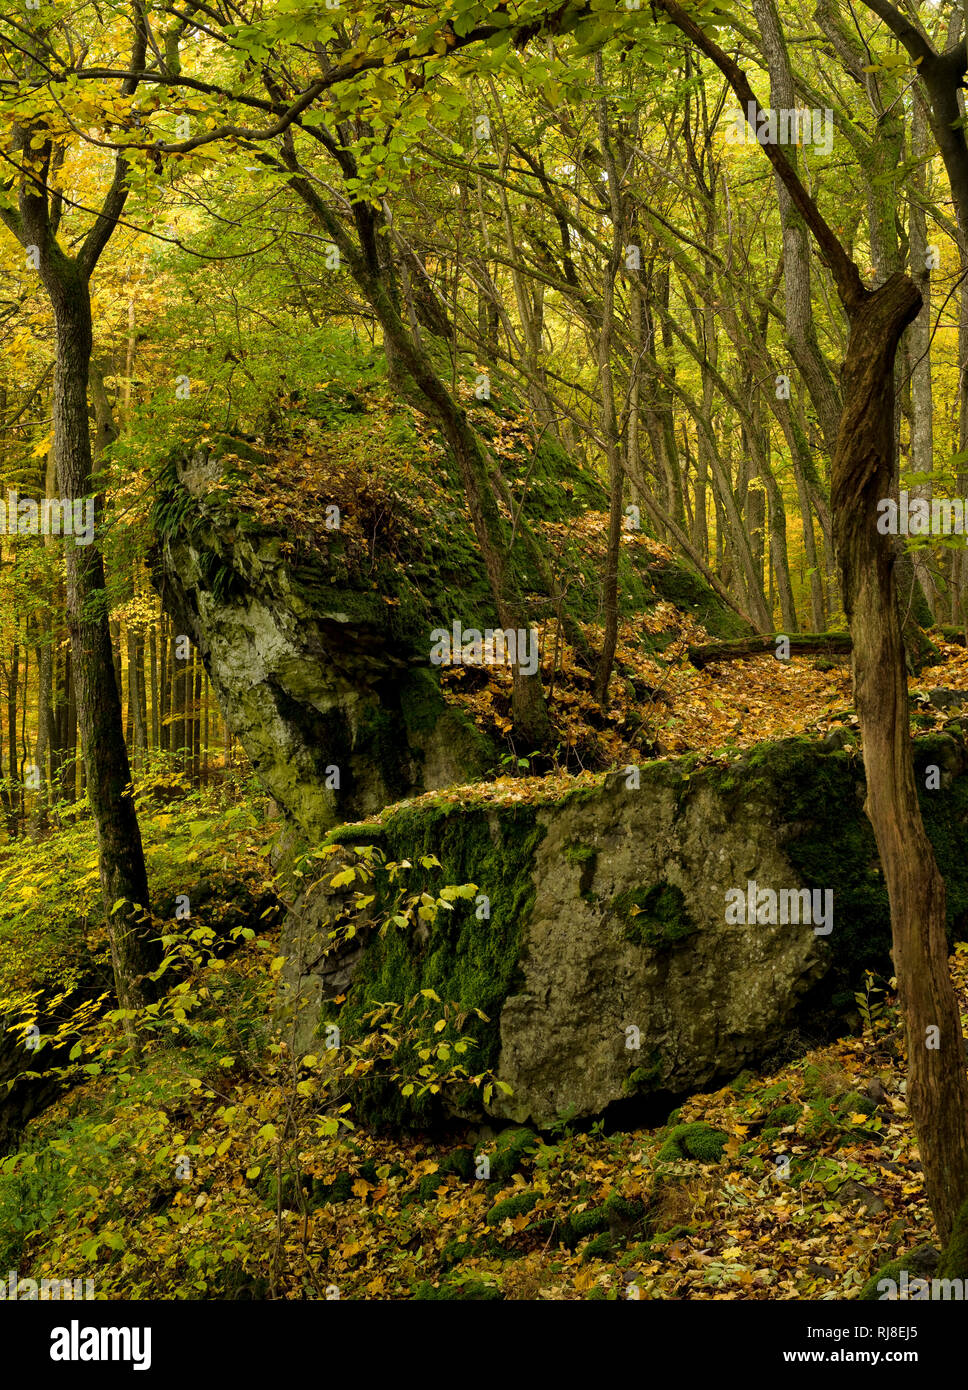 Deutschland, Bayern, Naturpark Bayrische Rhön, UNESCO-Biosphärenreservat Felsformation Teufelskeller, 'AM', Naturschutzgebiet Gangolfsberg Lange Rhön Foto de stock